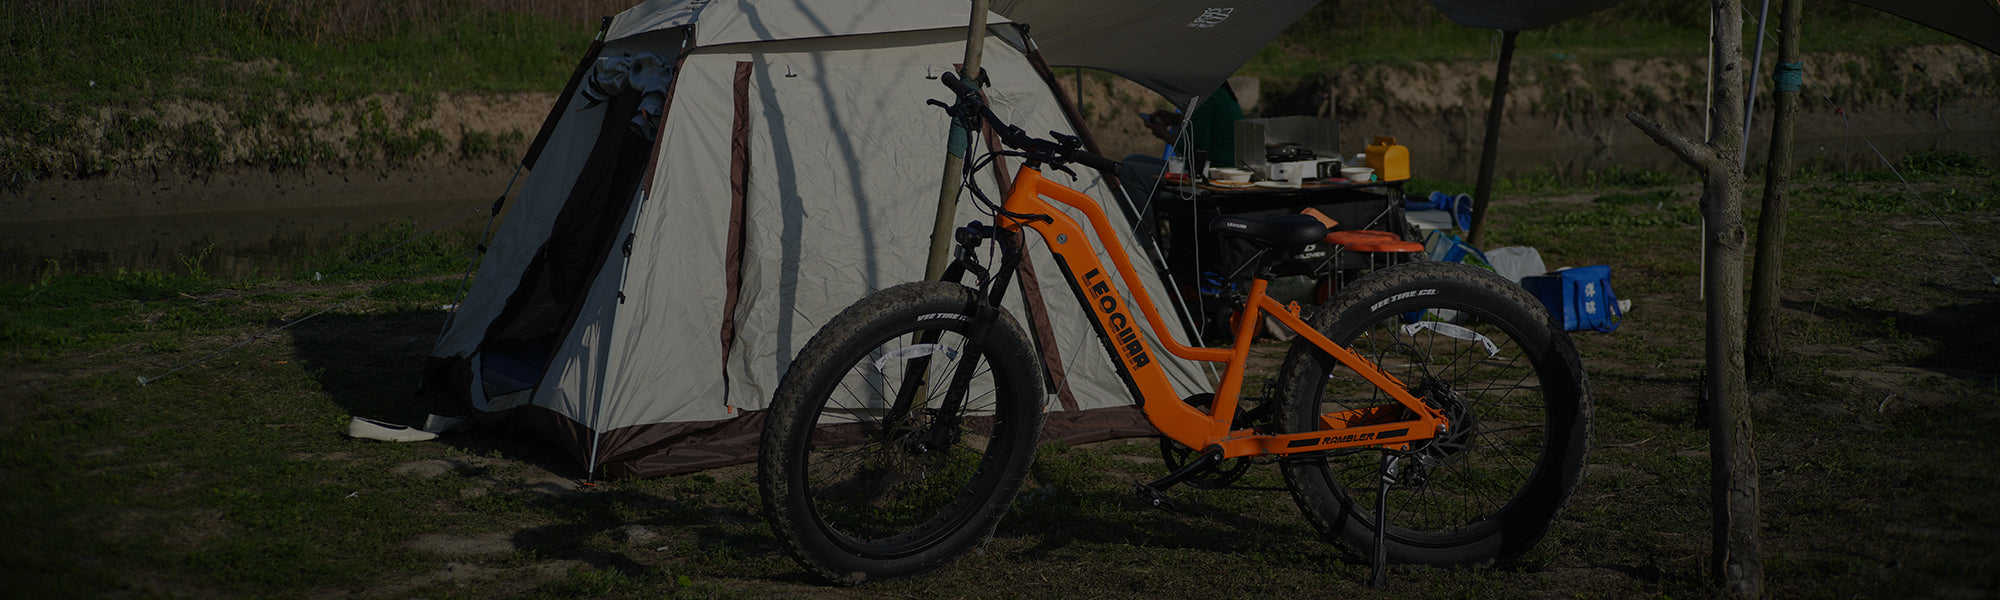 Leoguar Electric Bike Accessories